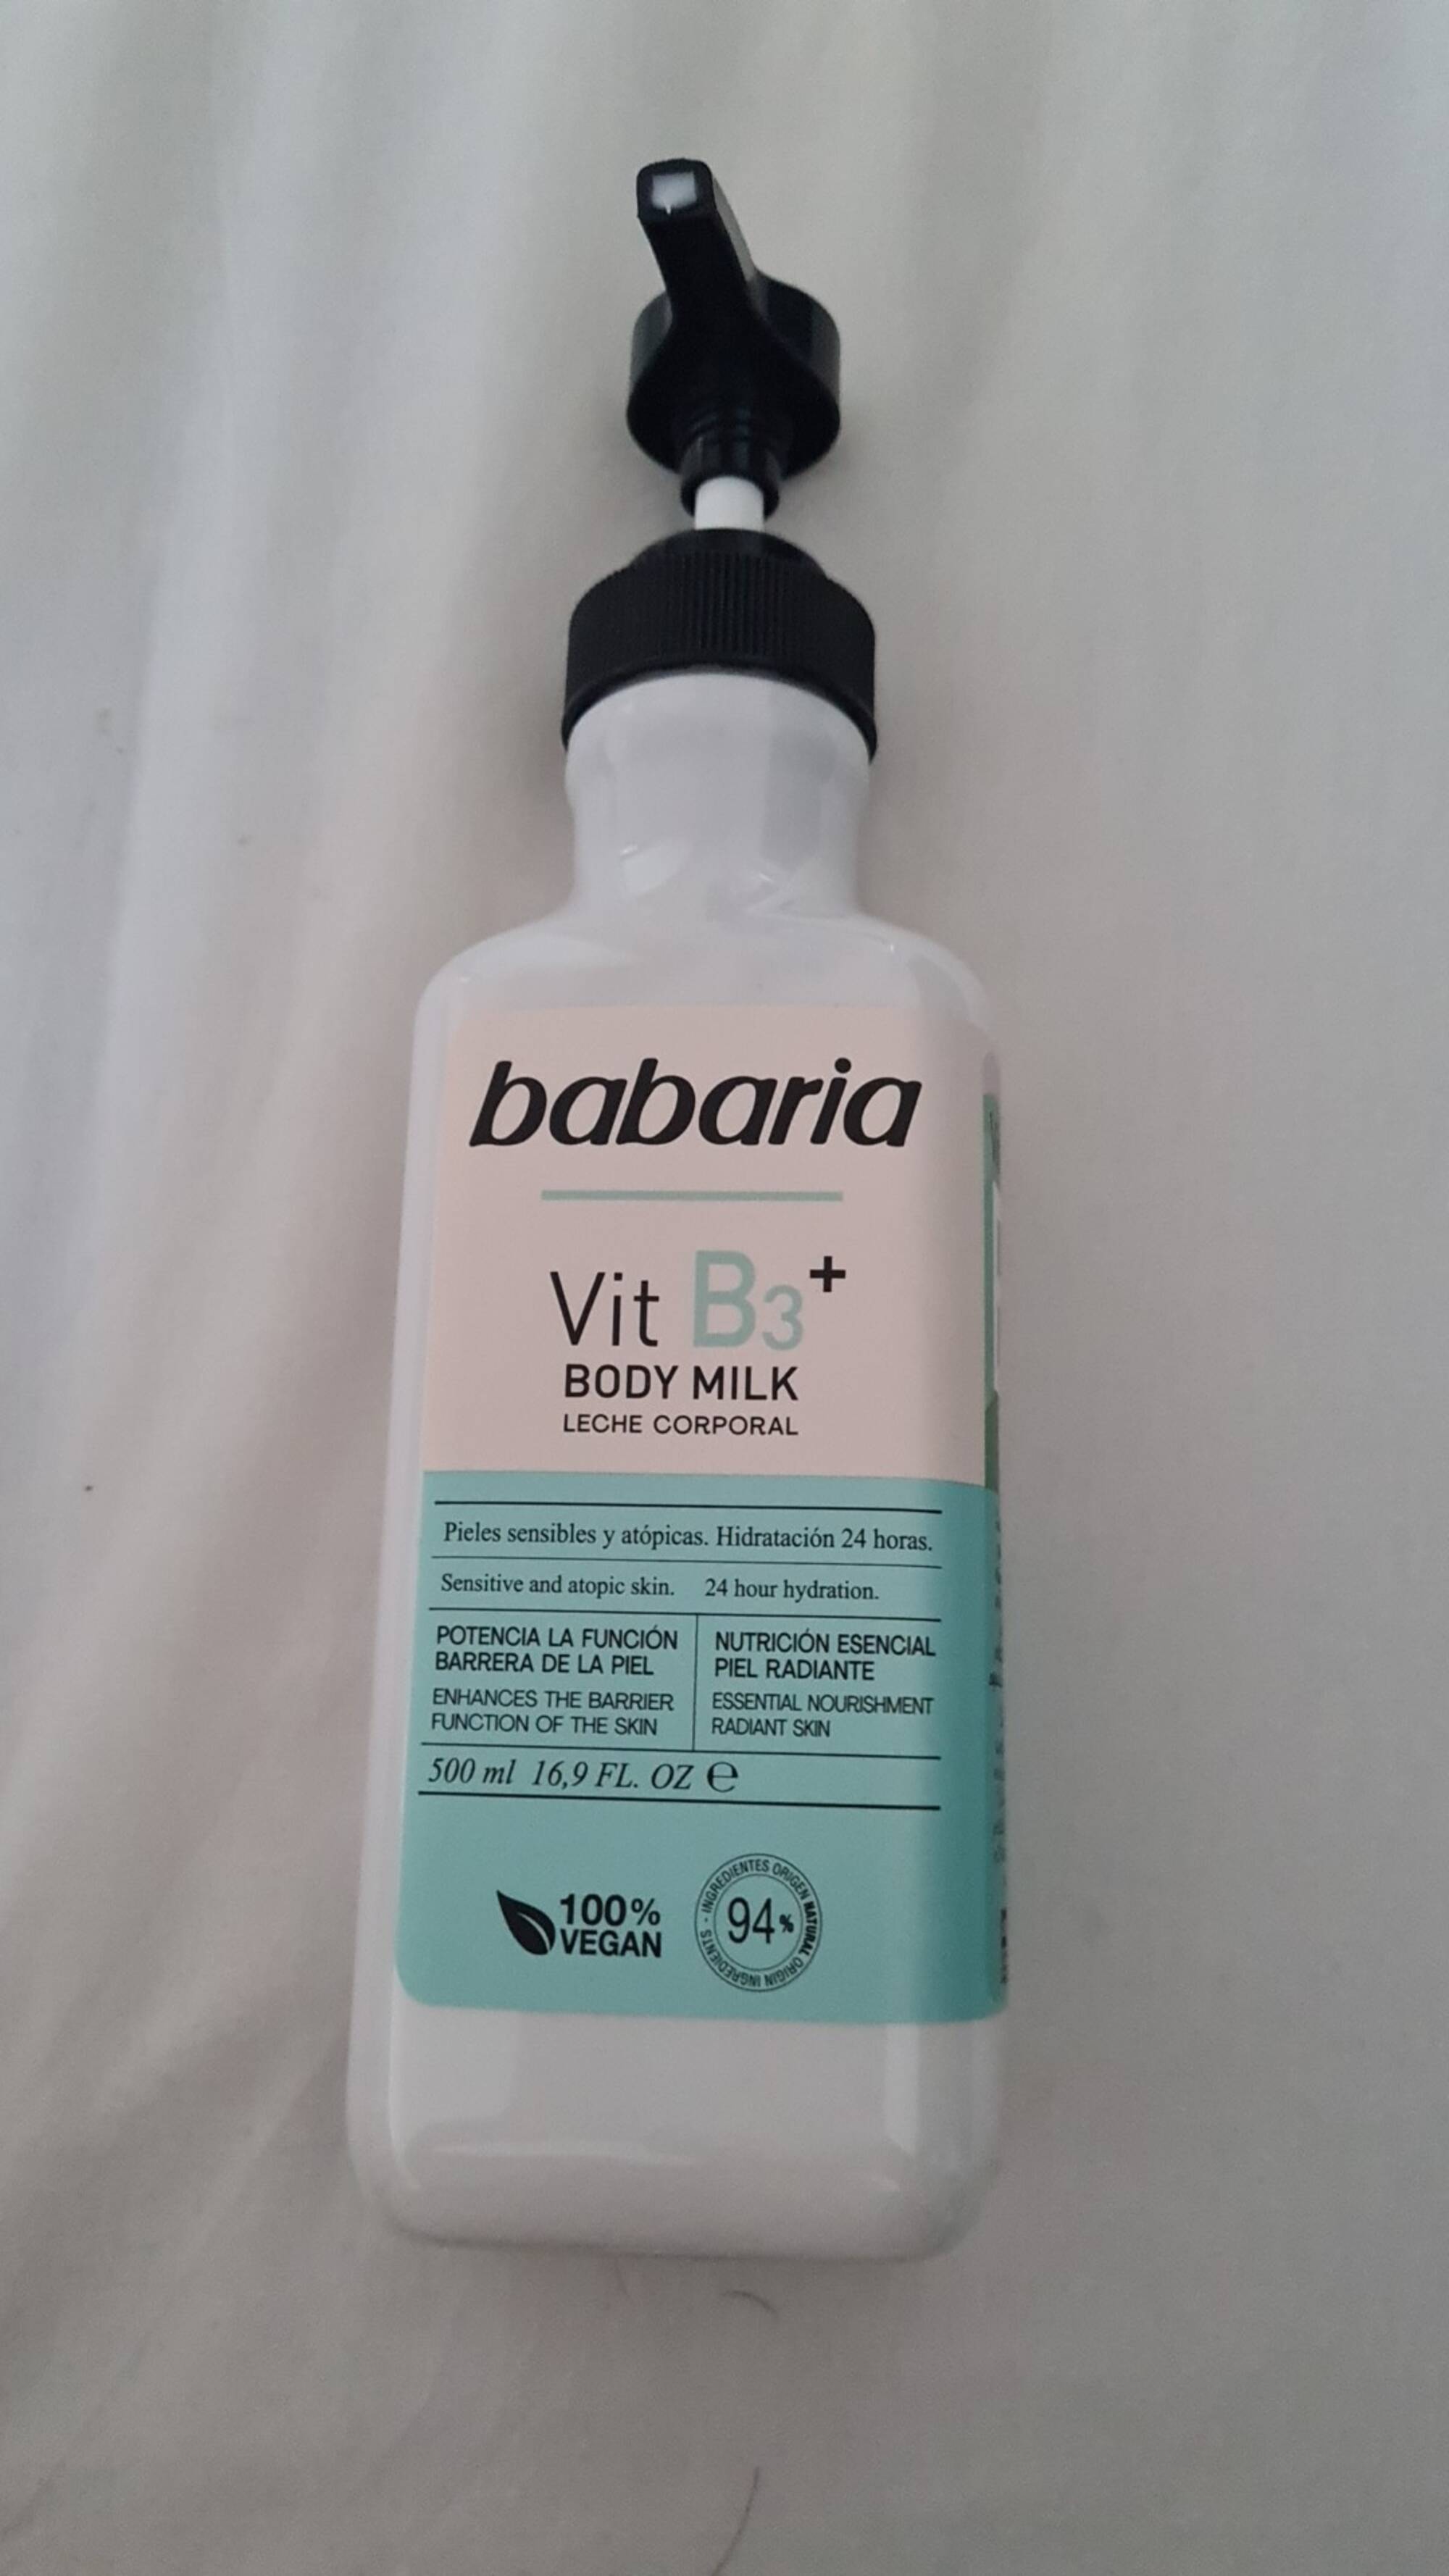 BABARIA - Vit B3+ Body milk